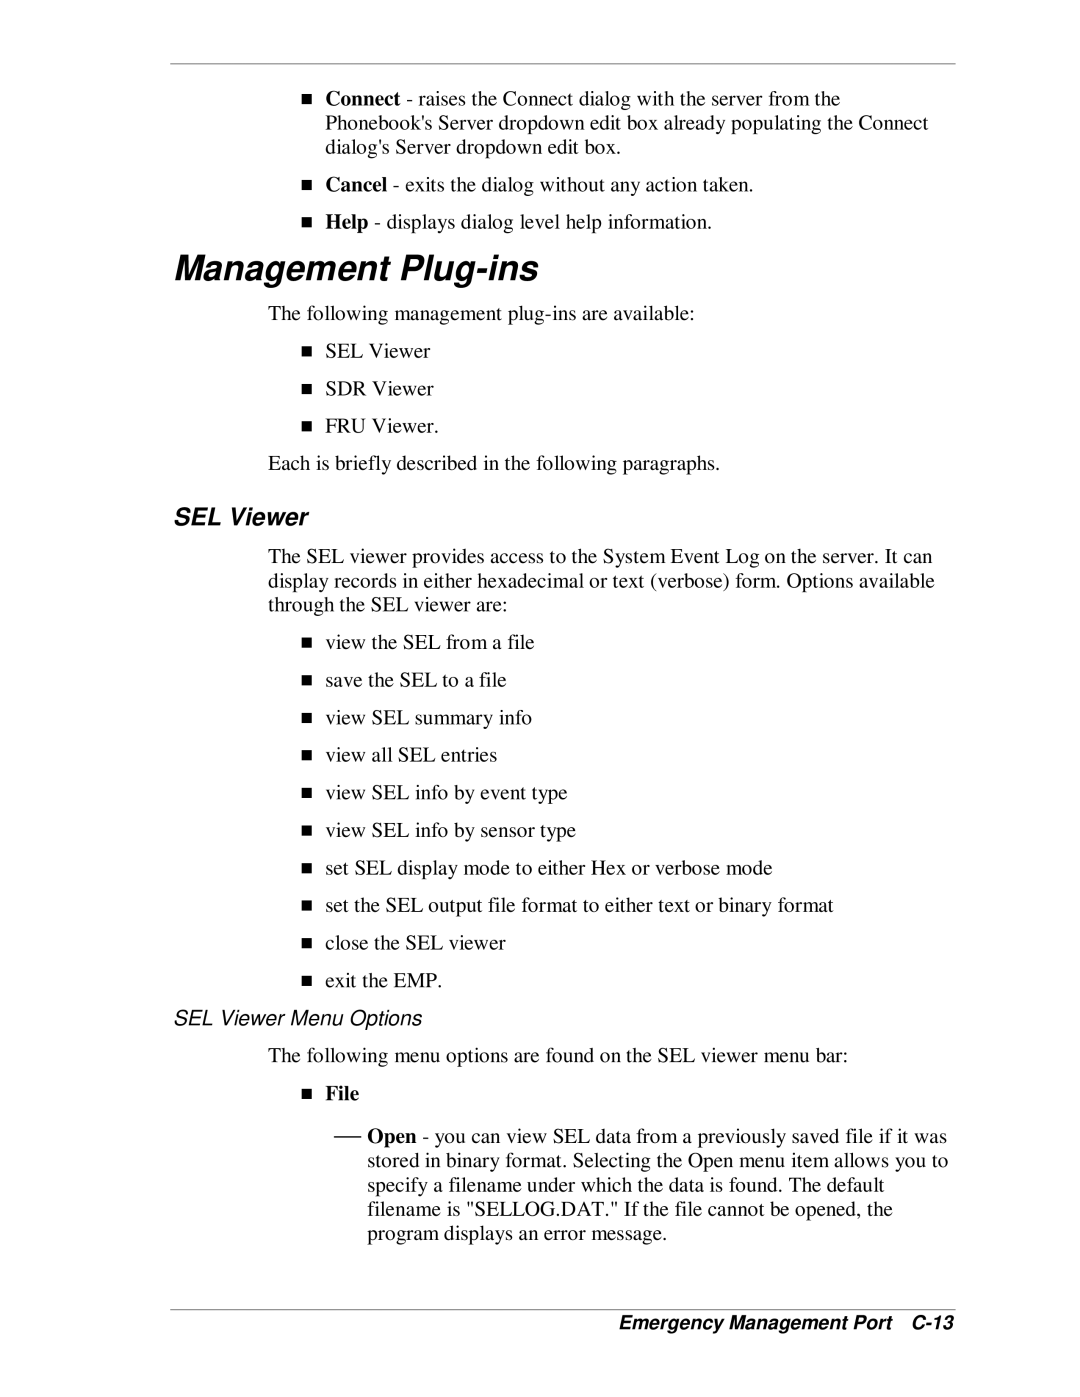 NEC MH4500 manual Management Plug-ins, SEL Viewer Menu Options, File 